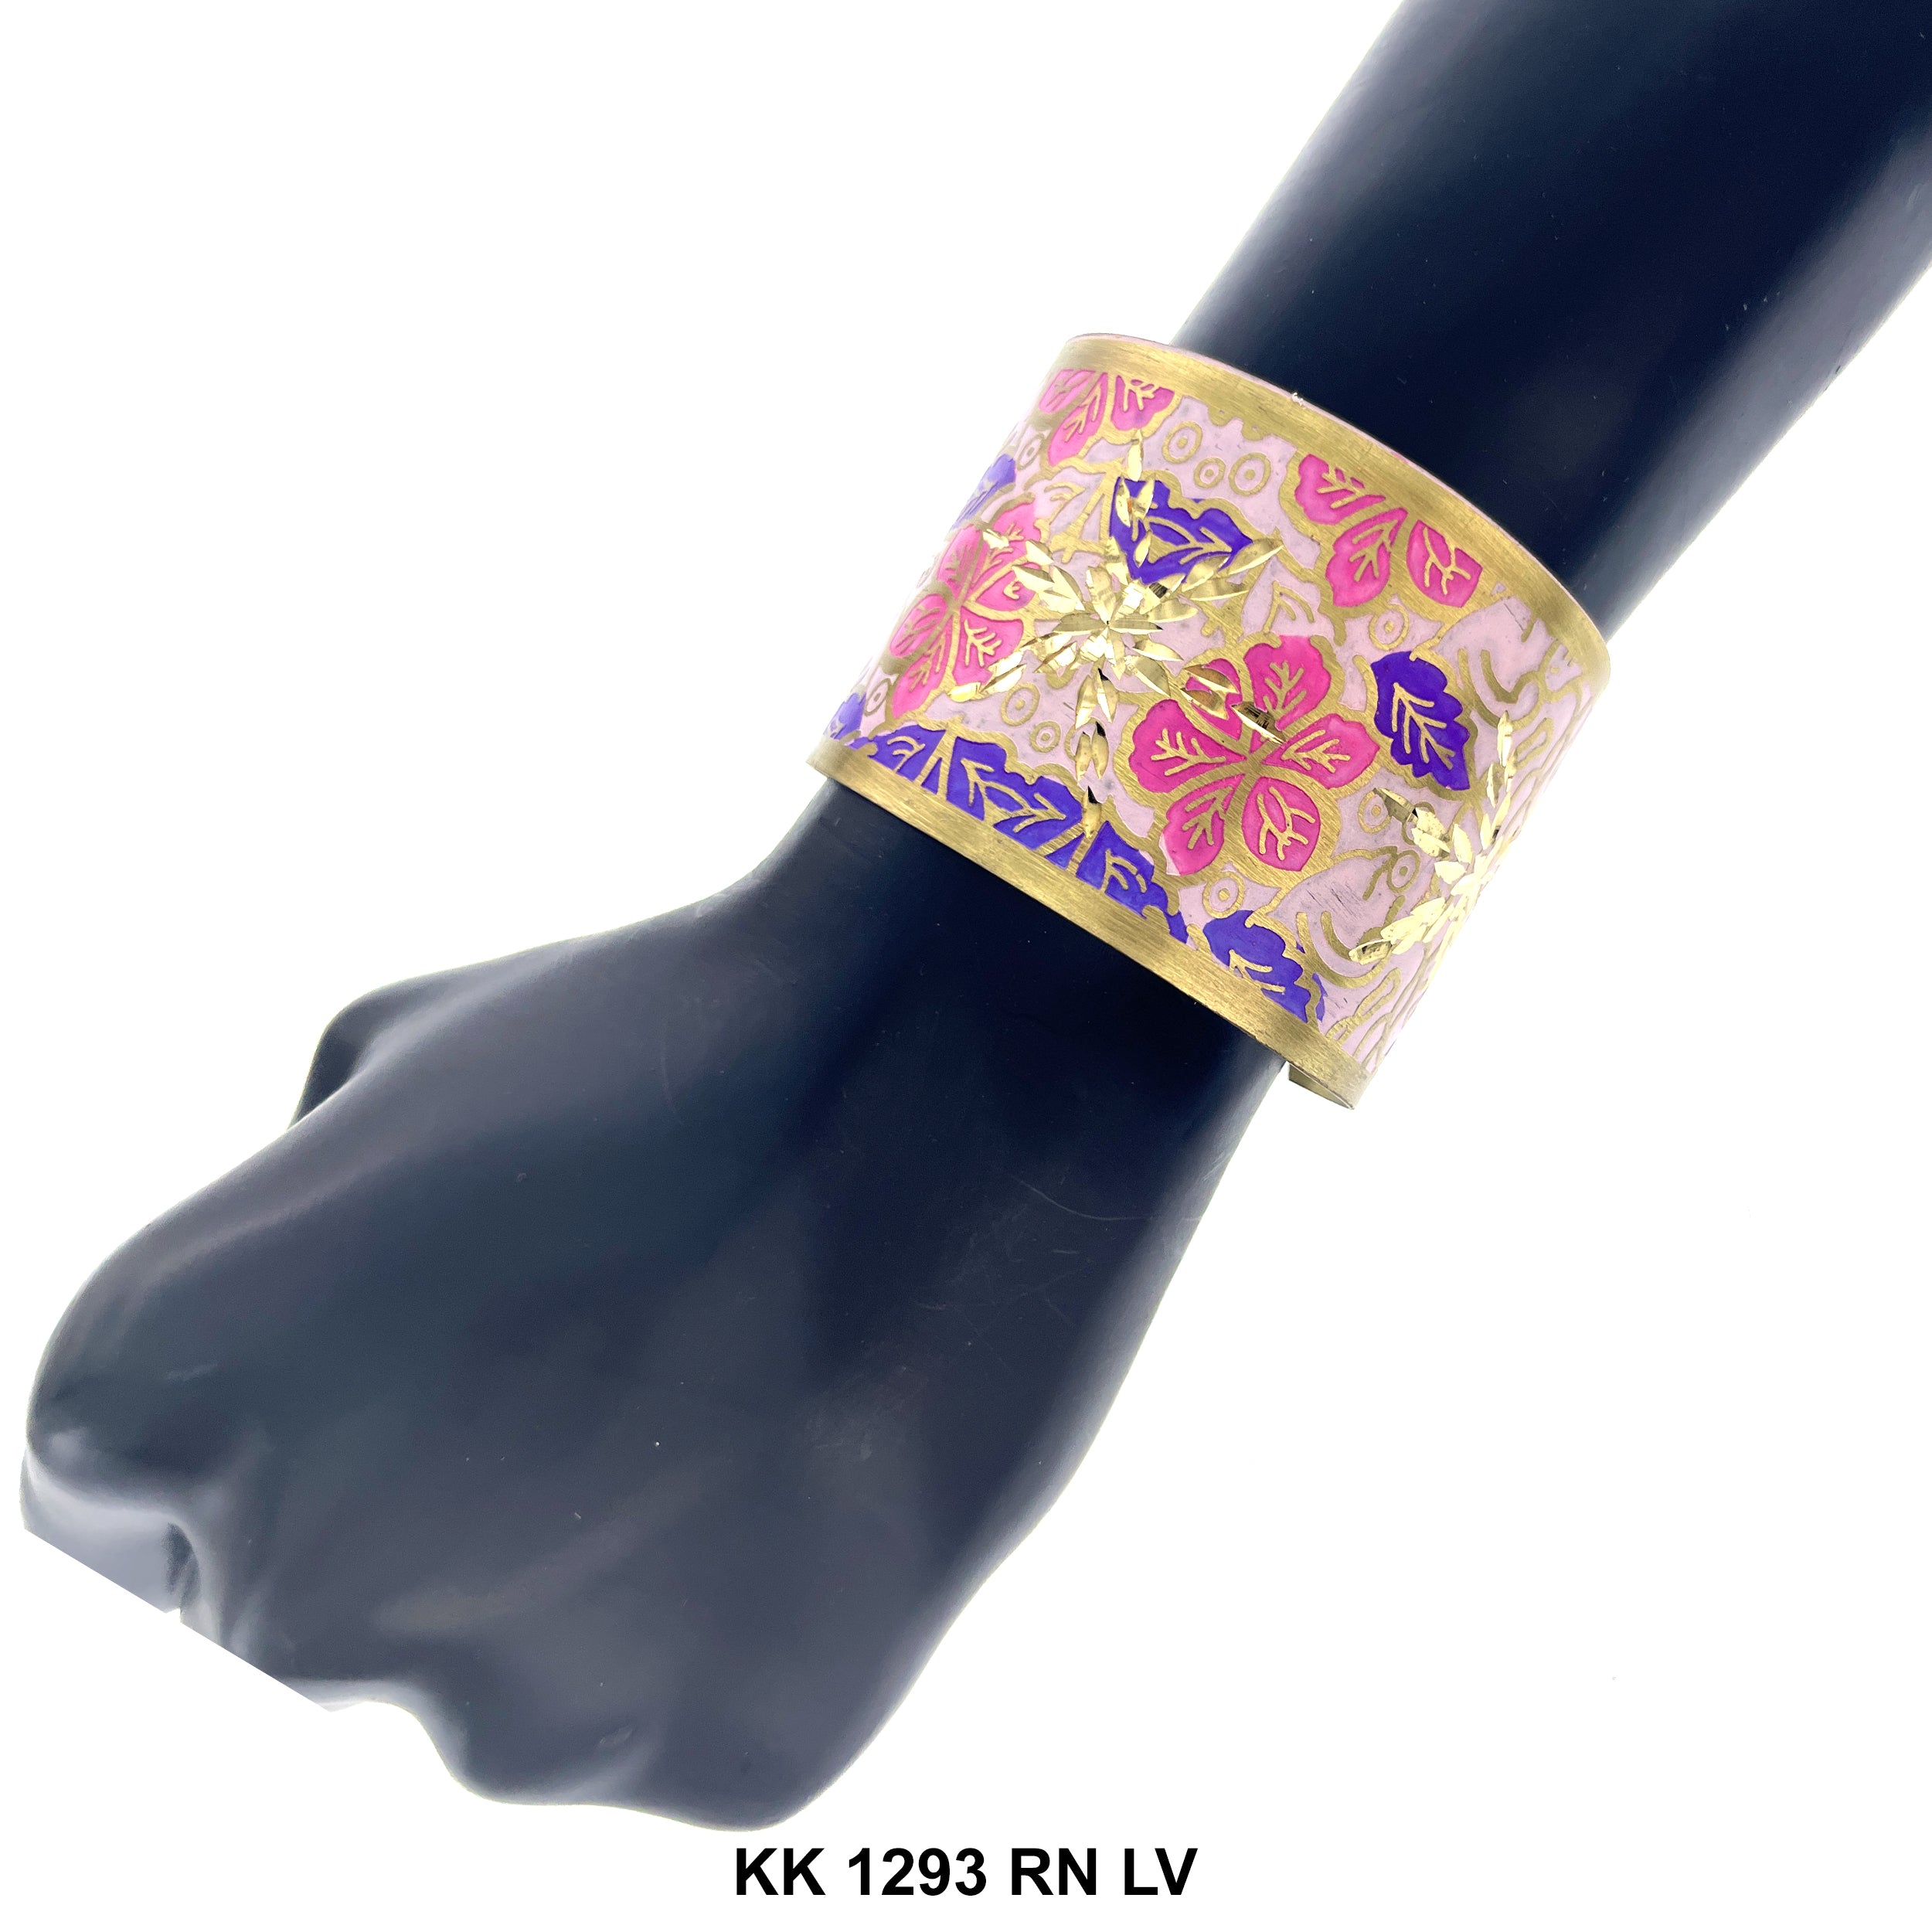 Hand Engraved Cuff Bangle Bracelet KK 1293 RN LV